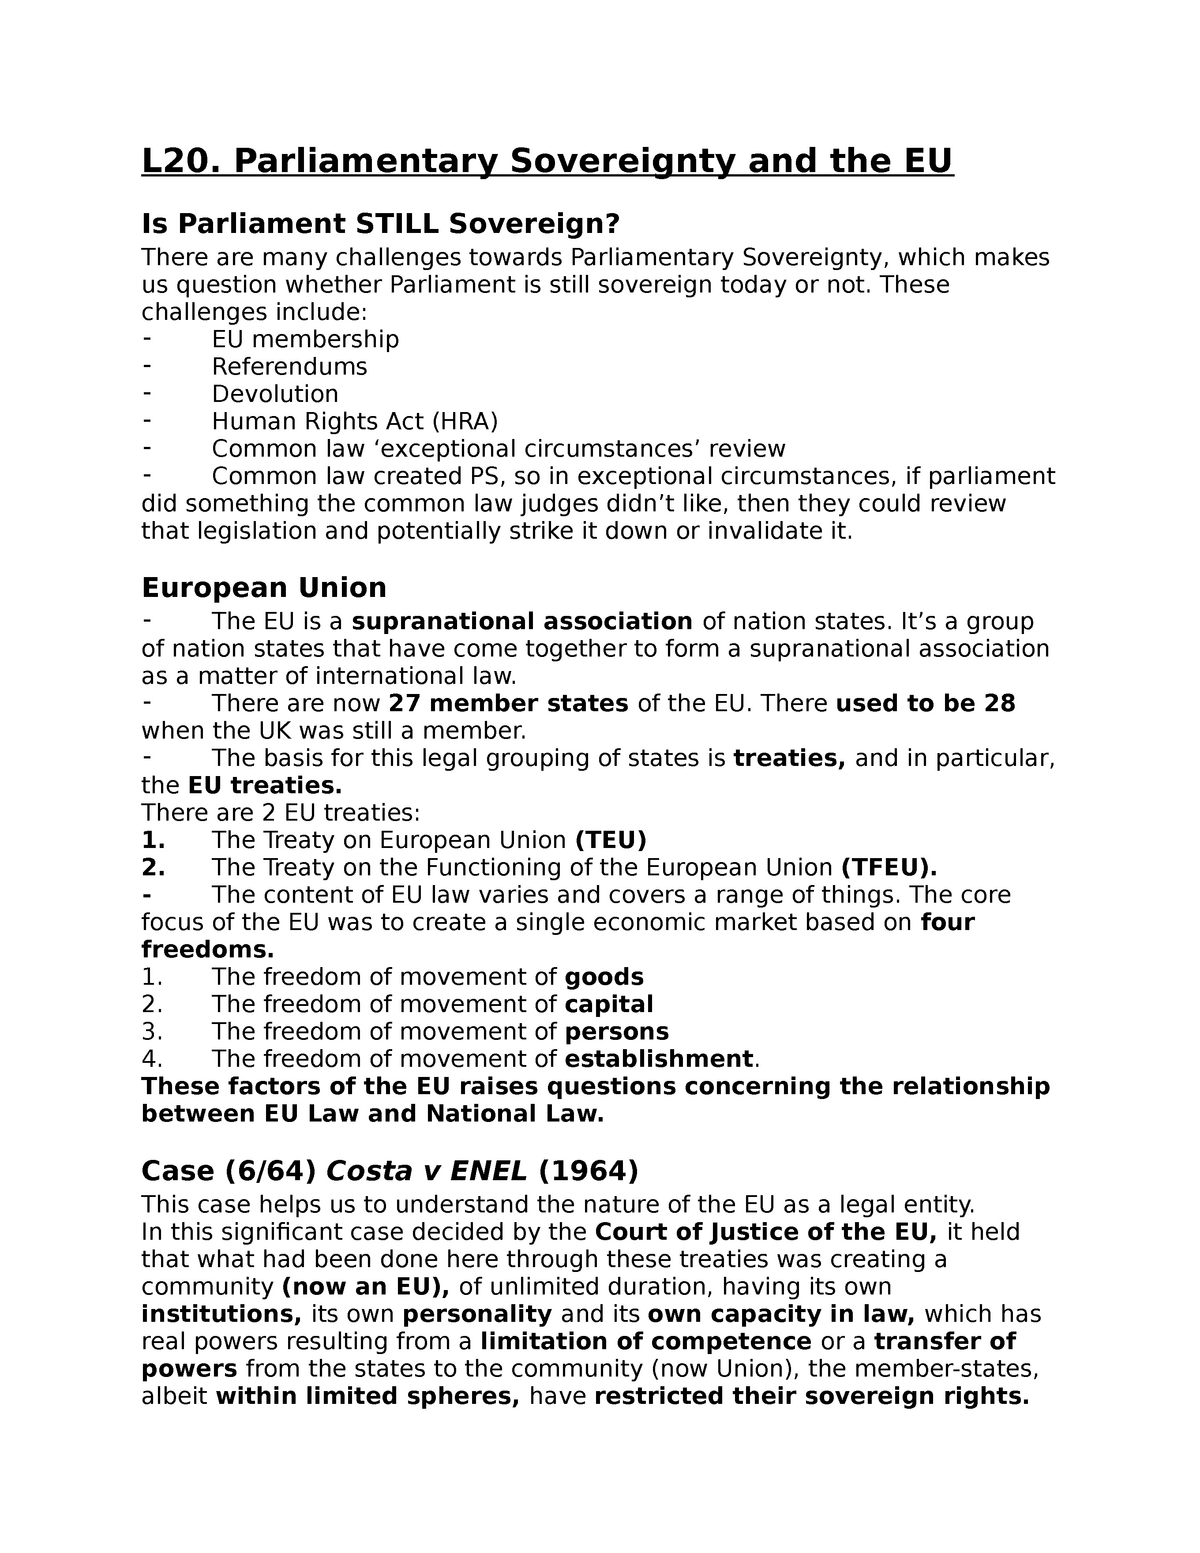 parliamentary sovereignty and the eu essay